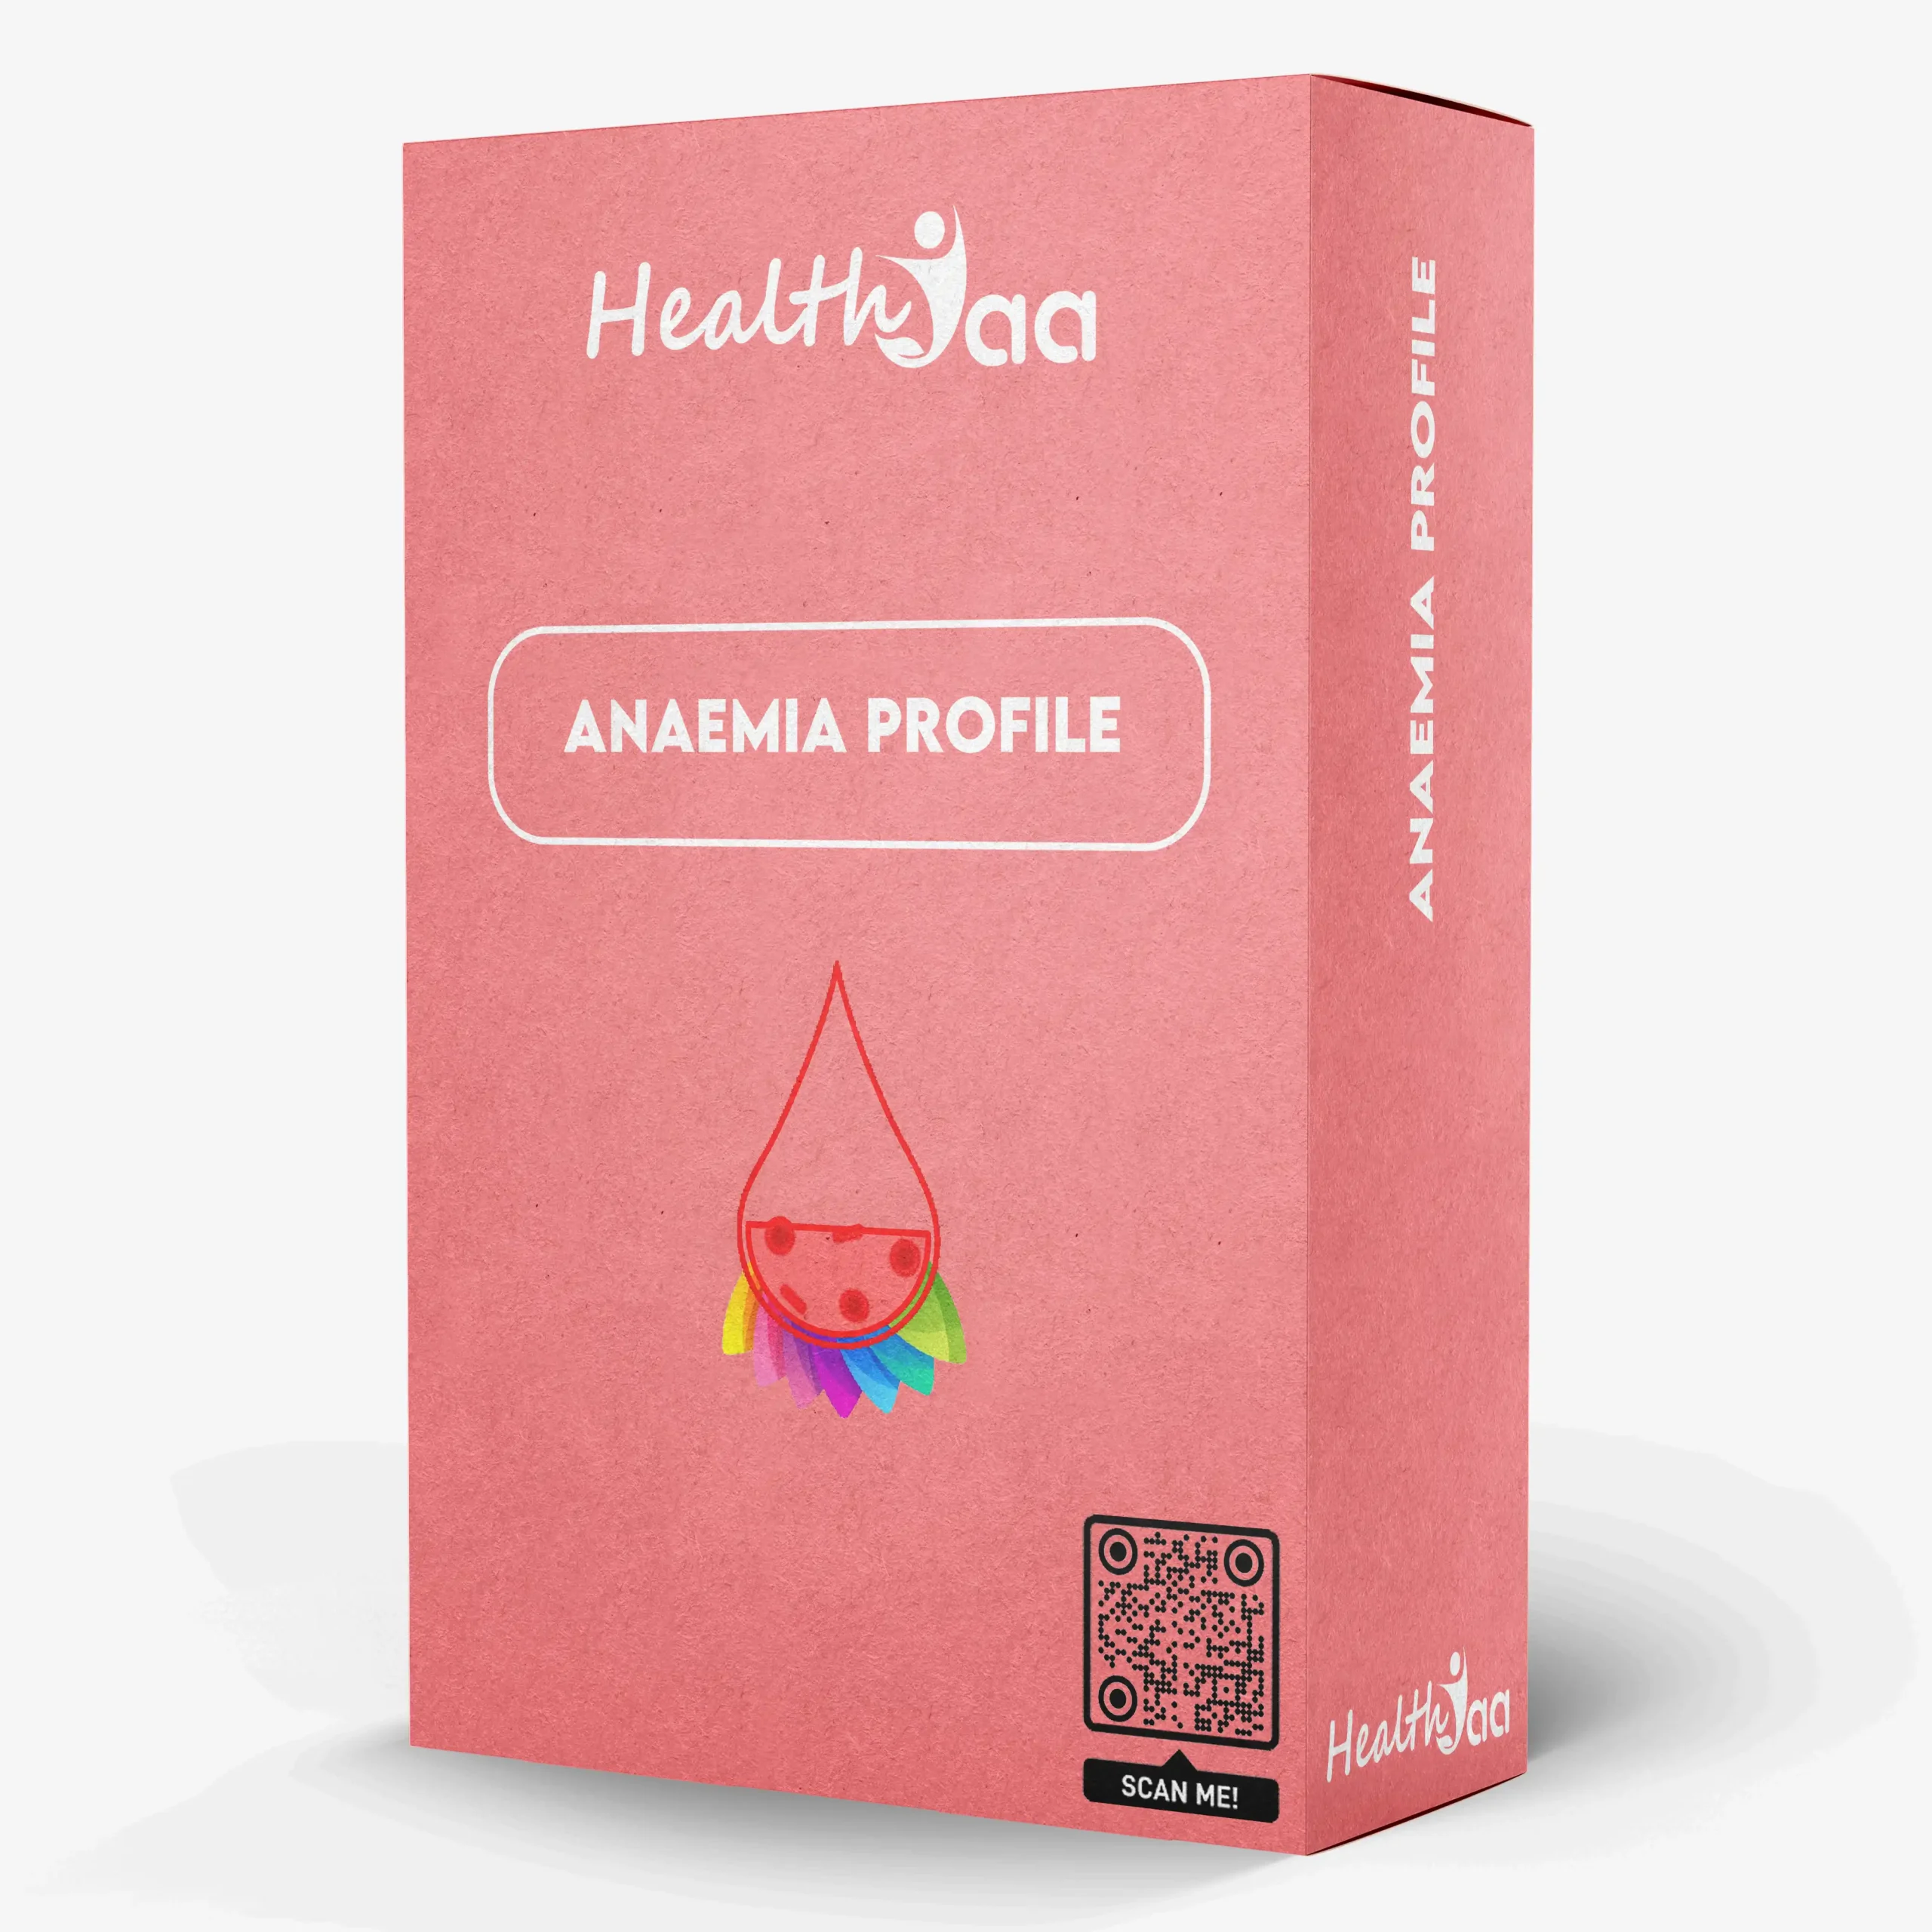 Anaemia profile sample collection kit